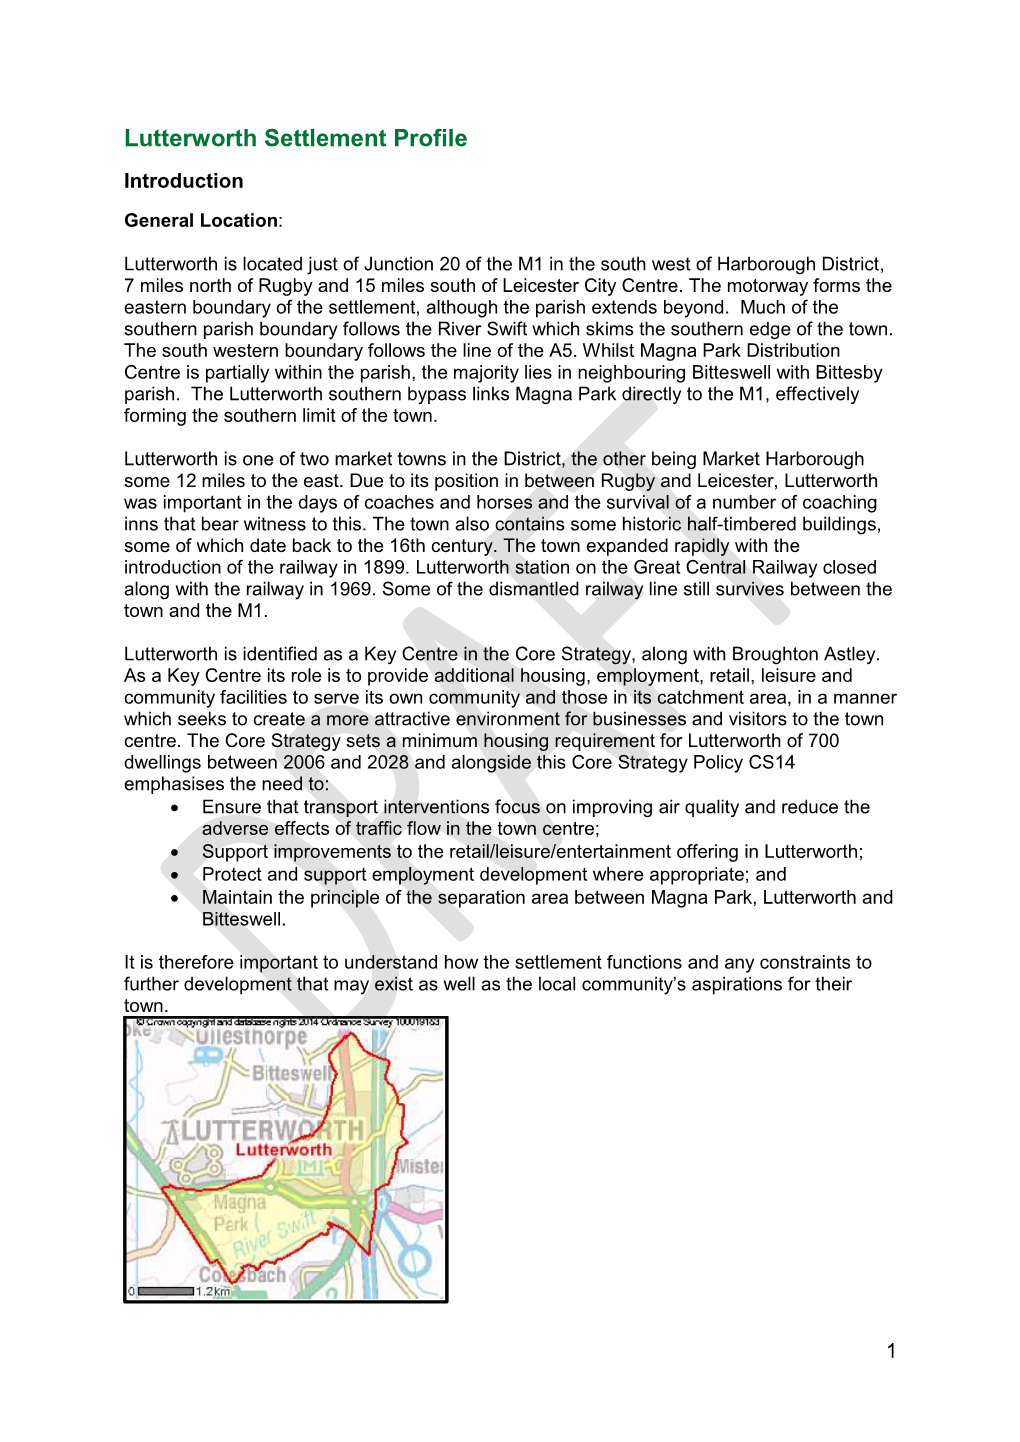 Lutterworth Settlement Profile Introduction